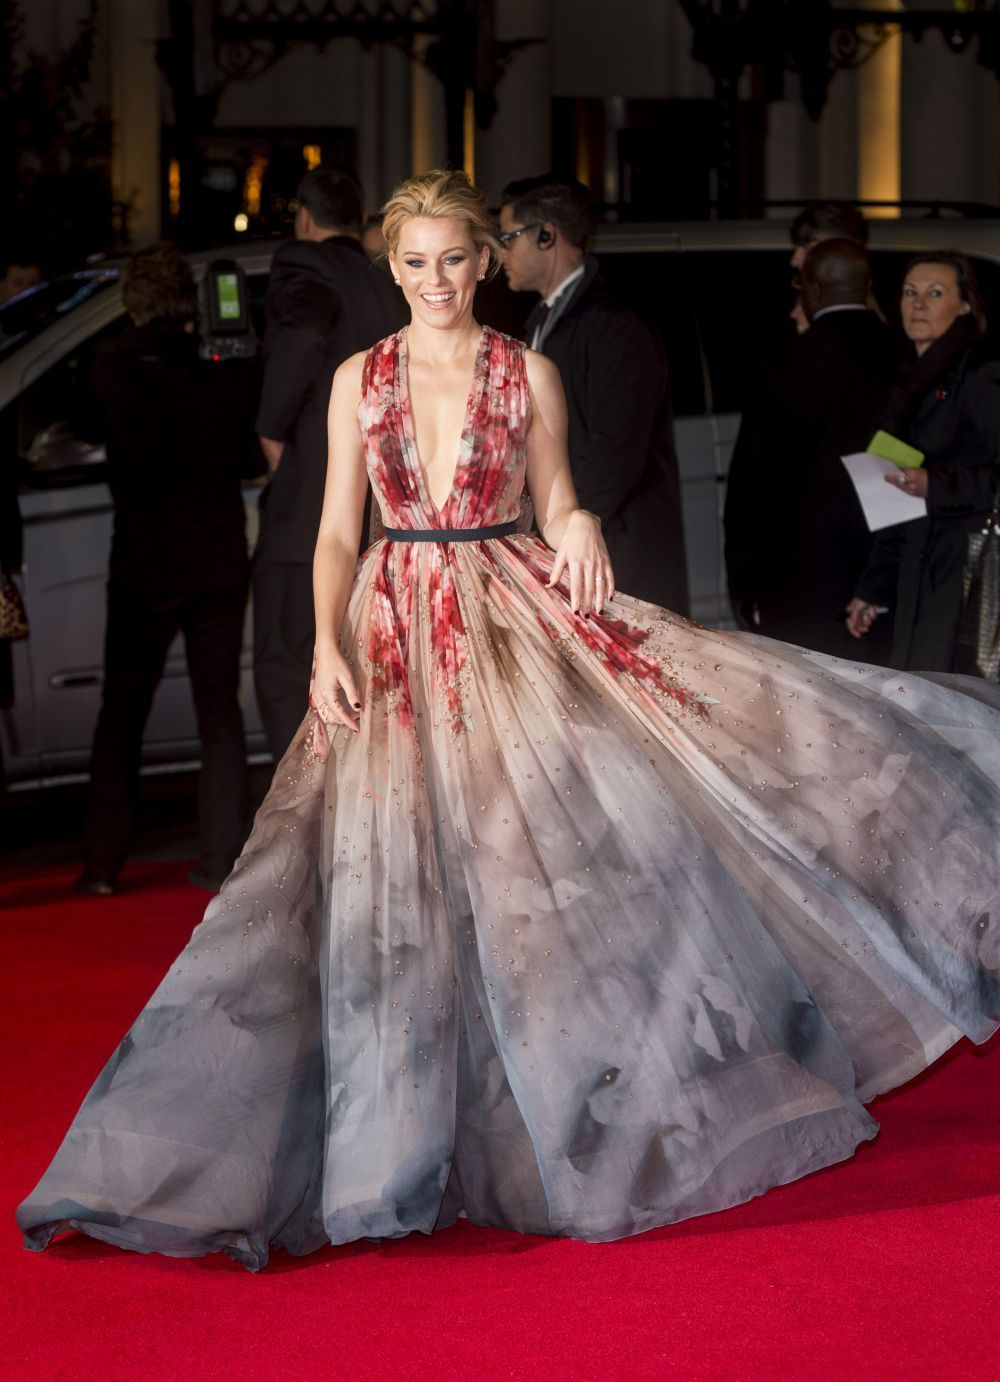 Elizabeth Banks, aparitie memorabila la premiera The Hunger Games: Mockingjay Part 1. Iata rochia superba despre care a vorbit toata lumea&nbsp;